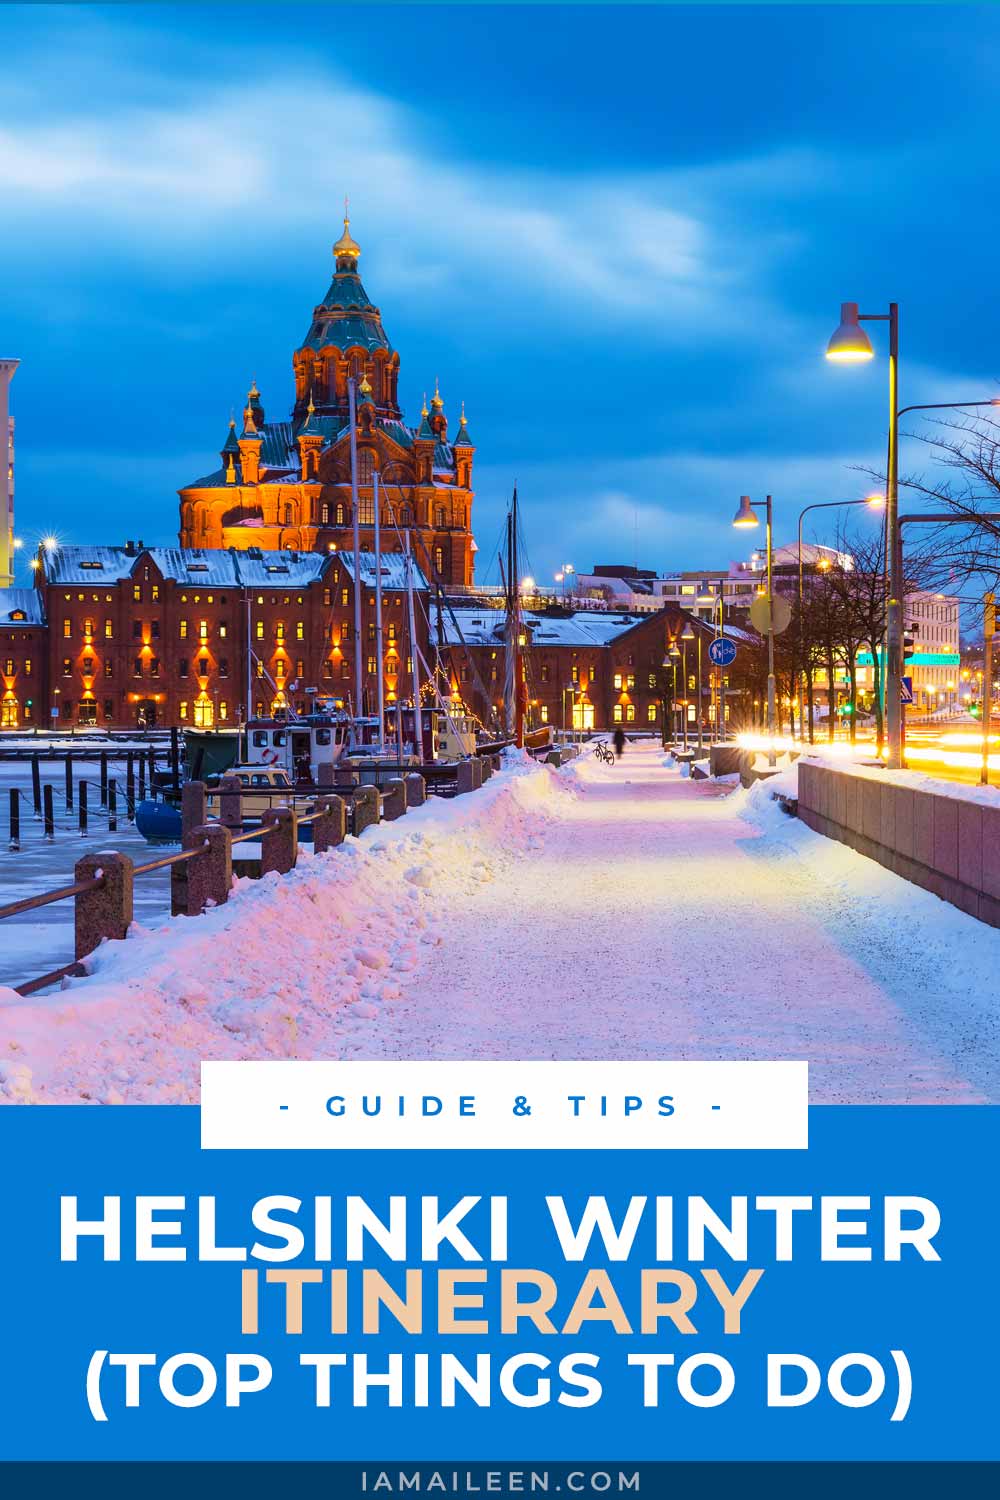 Helsinki Winter Itinerary